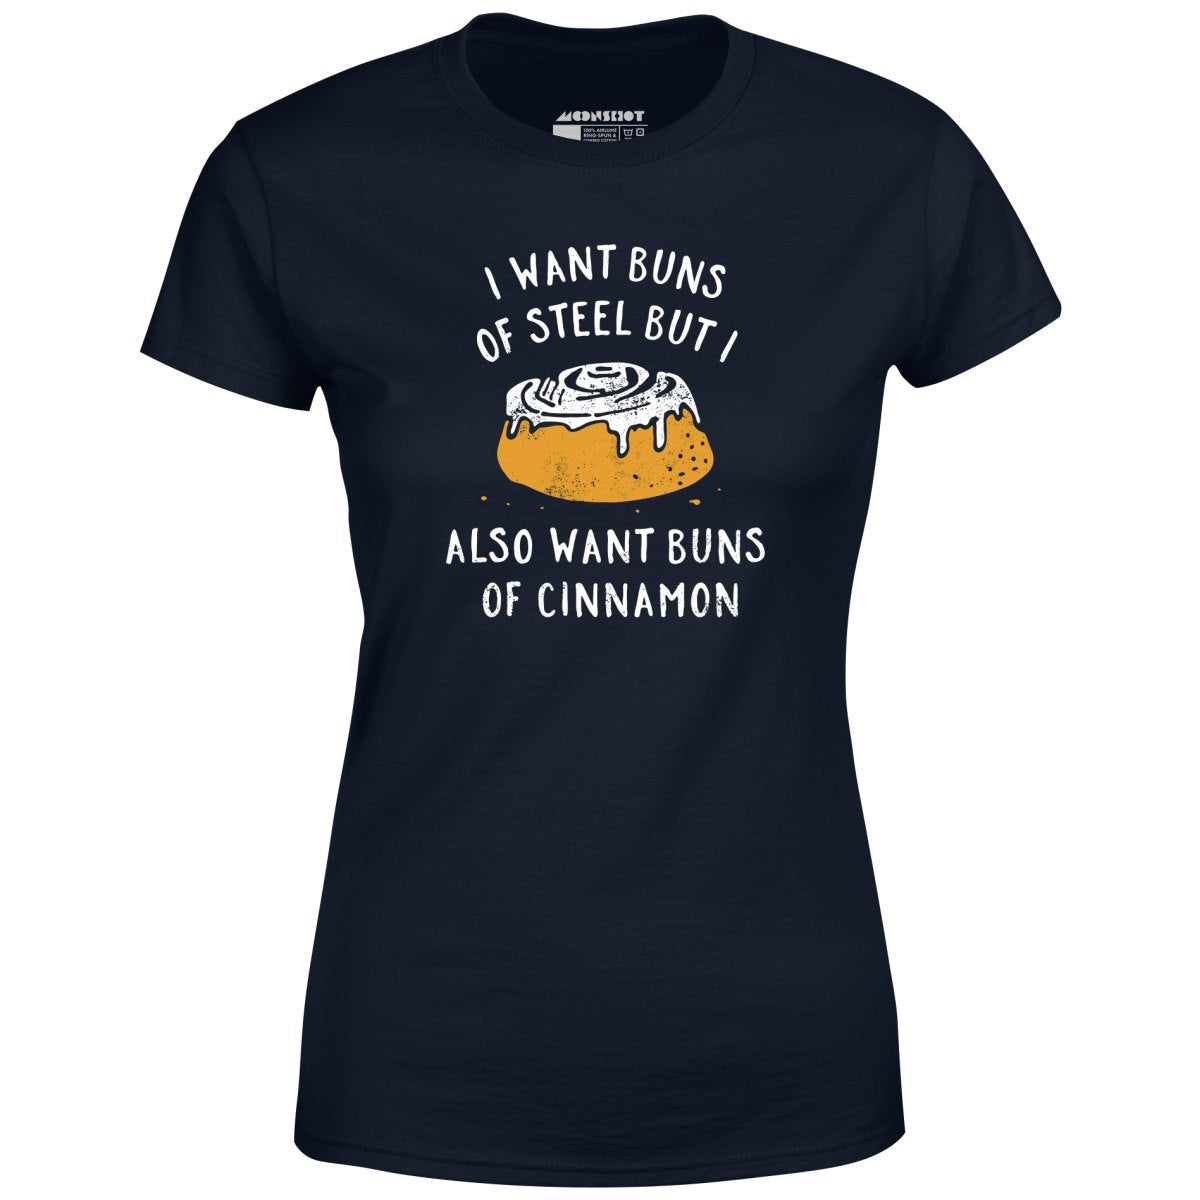 I Want Buns of Steel - Women's T-Shirt